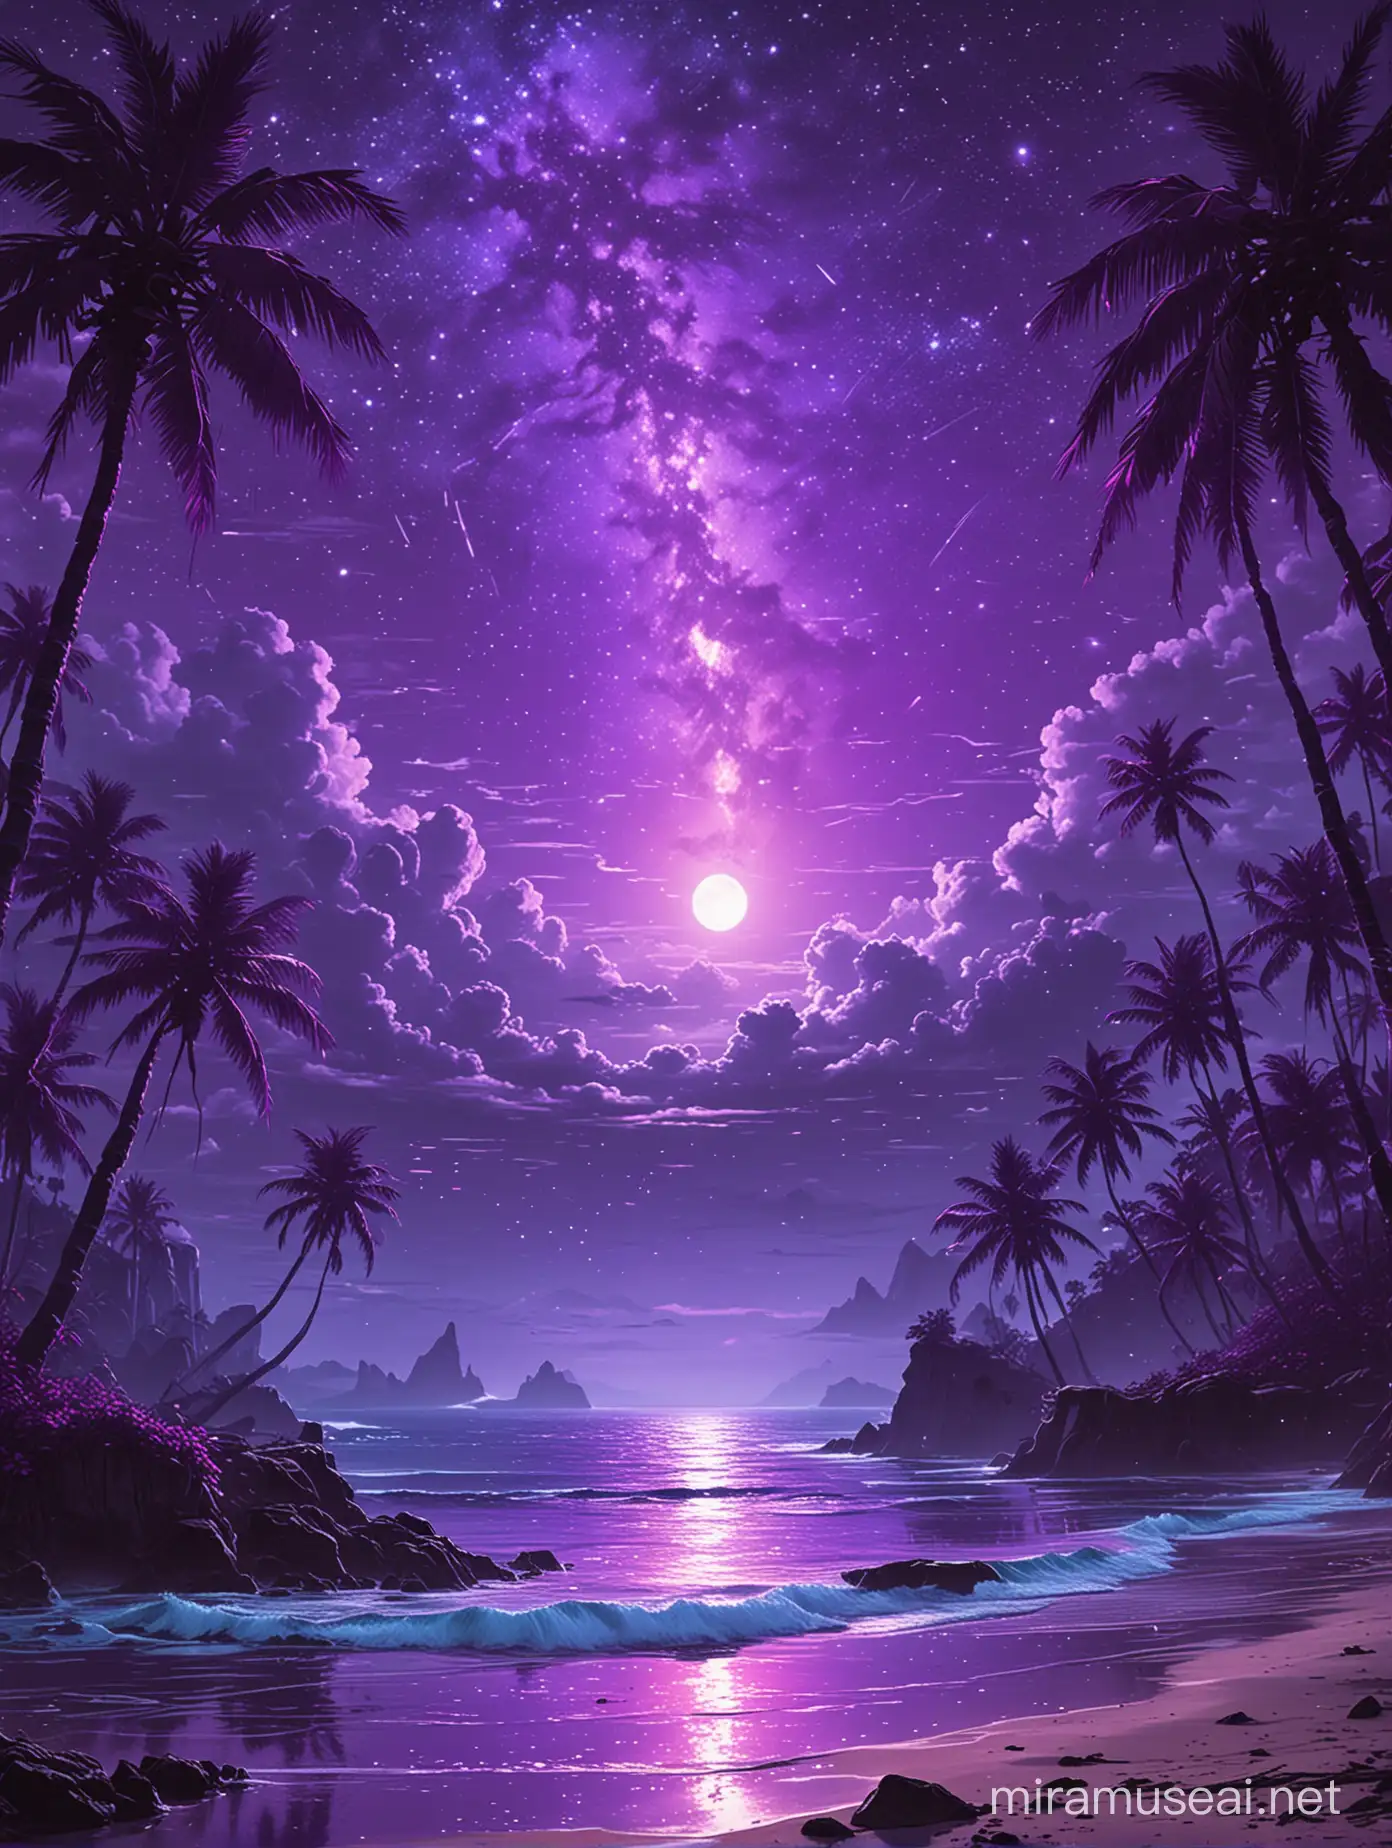 cyberpunk pacific island landscape with purple background, purple haze starry night
